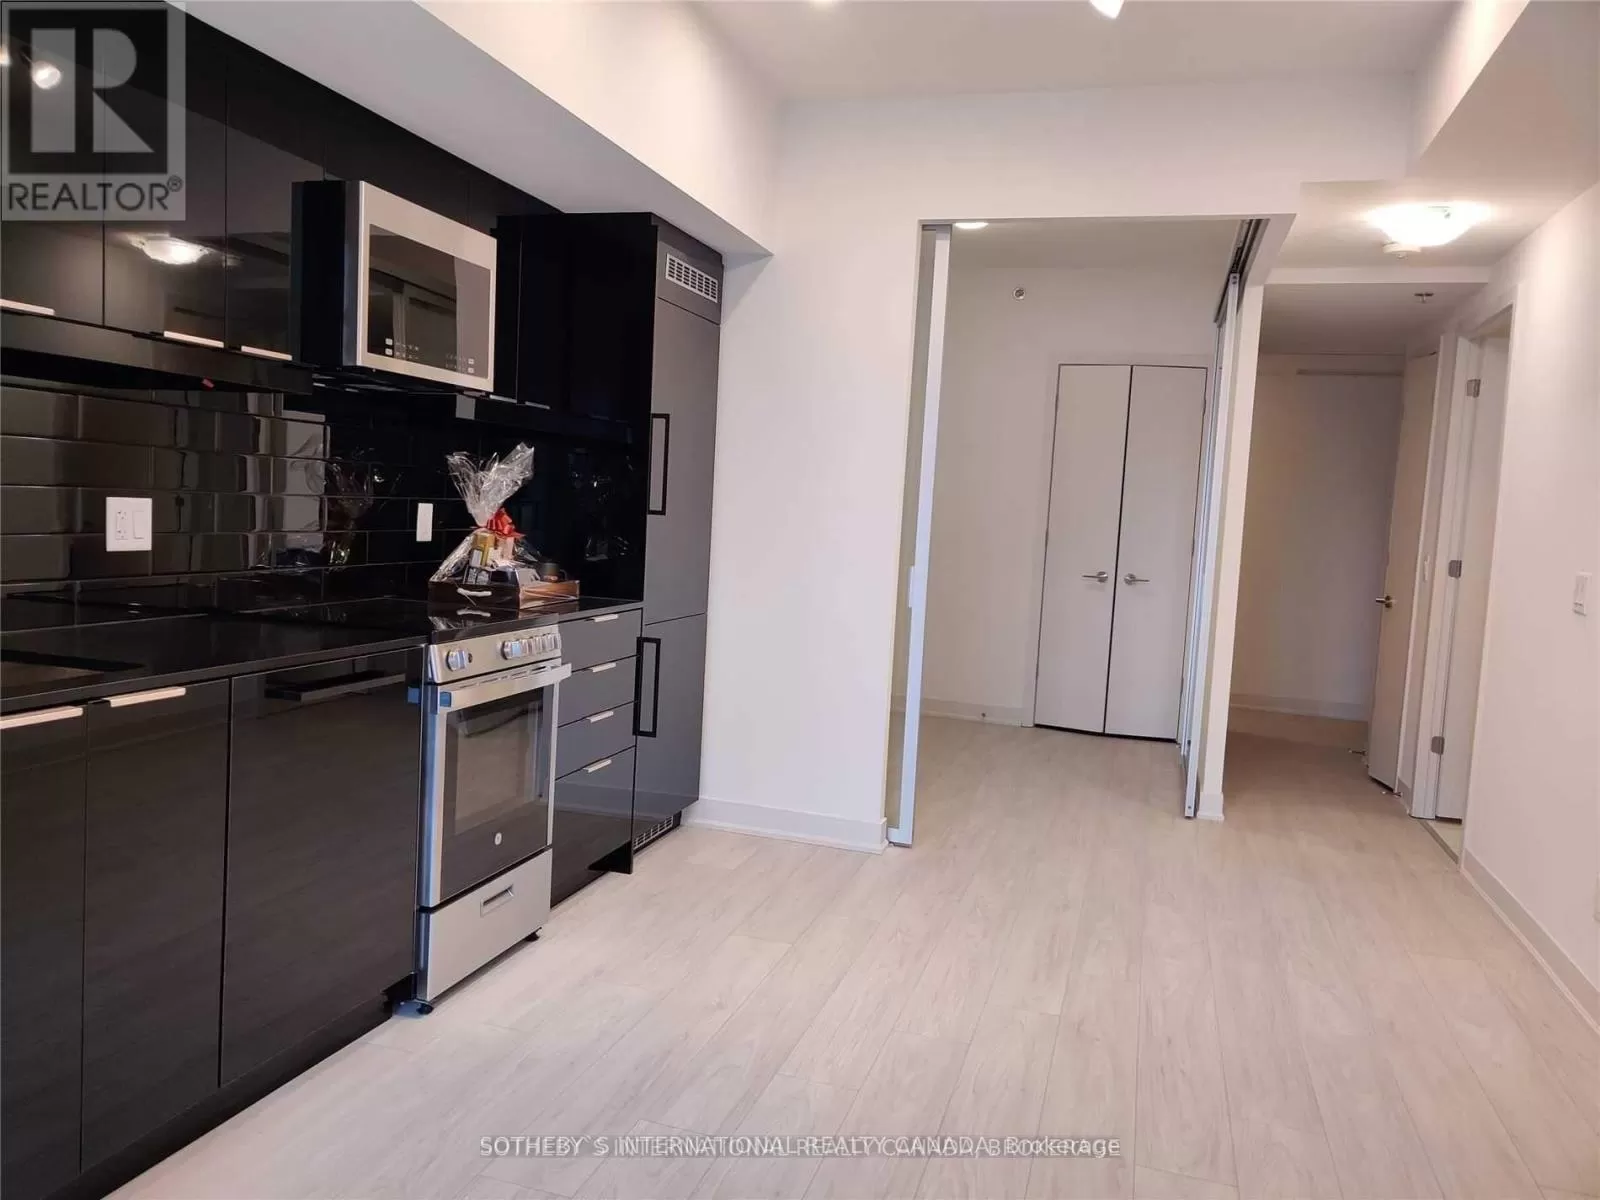 Apartment for rent: 311 - 90 Glen Everest Road, Toronto, Ontario M1N 0C3